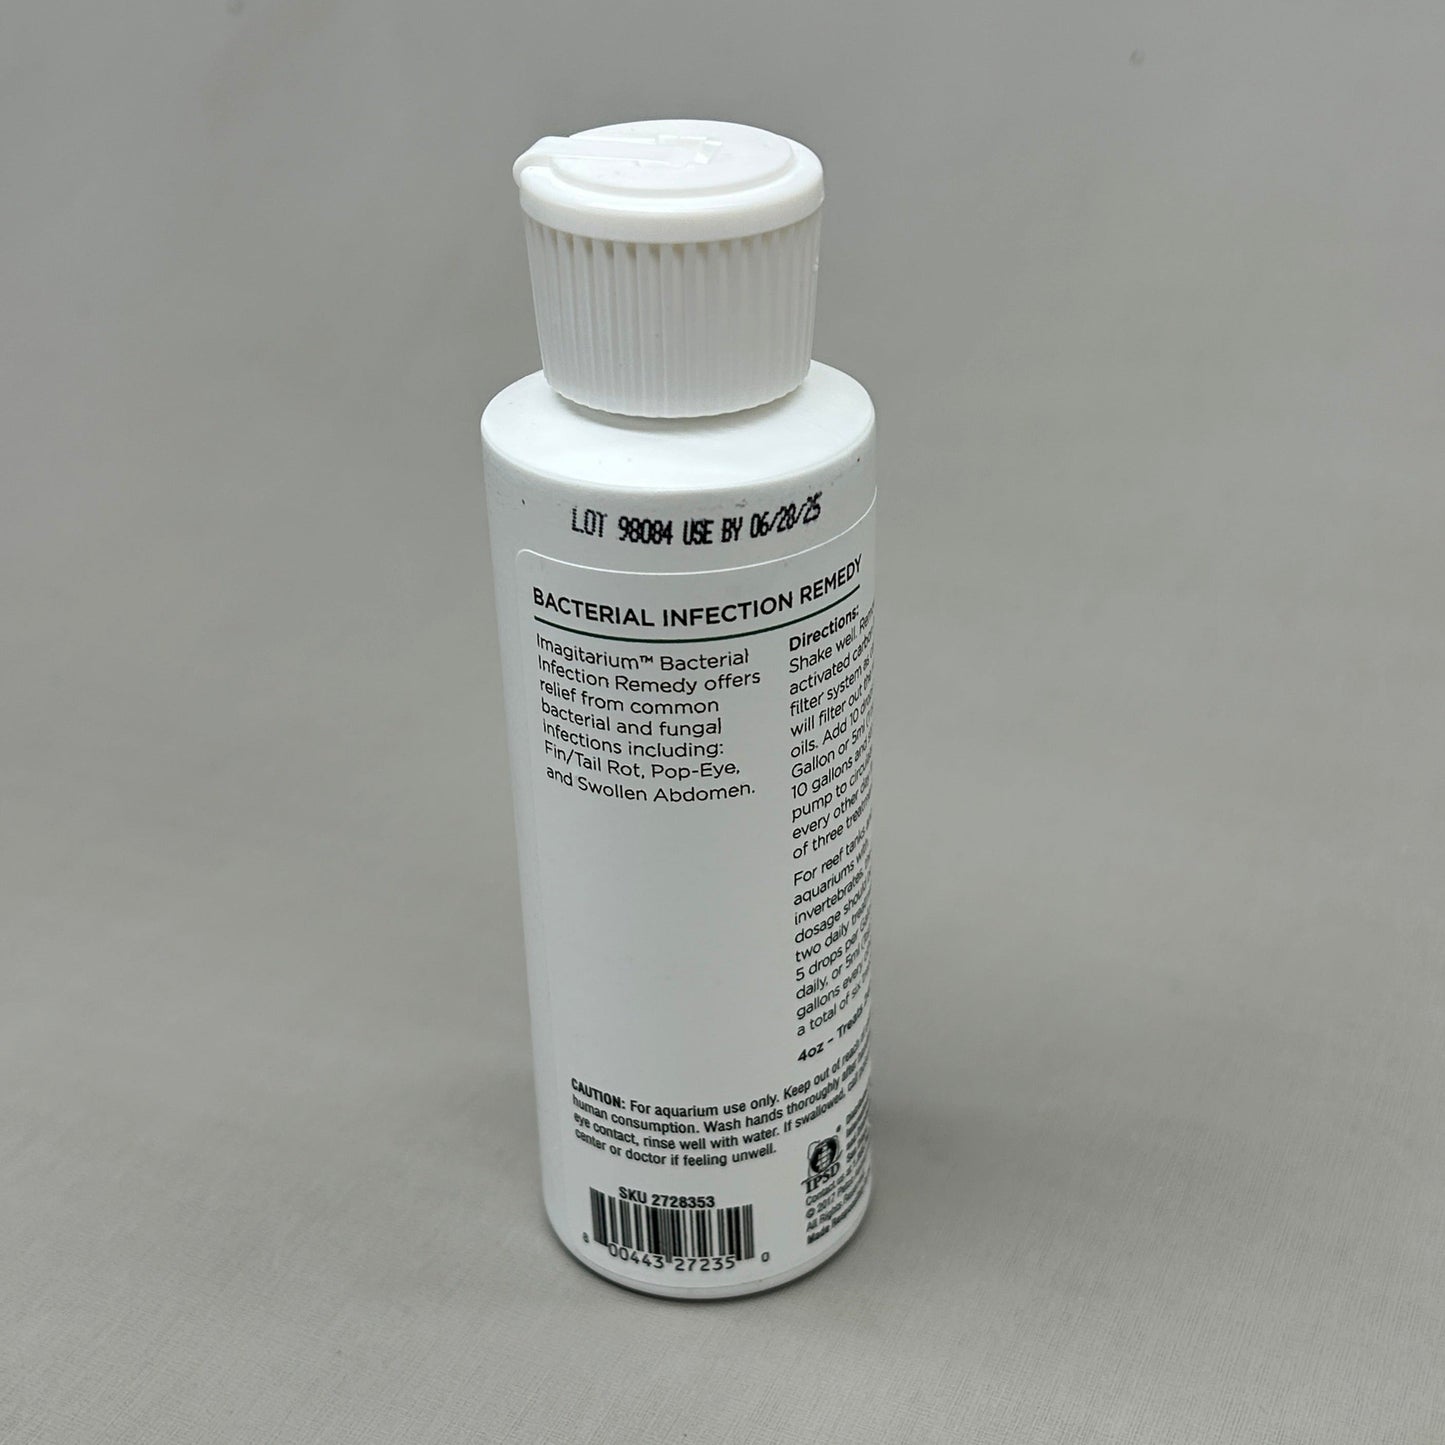 PETCO IMAGITARIUM Bacterial Infection Remedy Herbal / Non-Toxic 4 fl oz 6/25 (New)